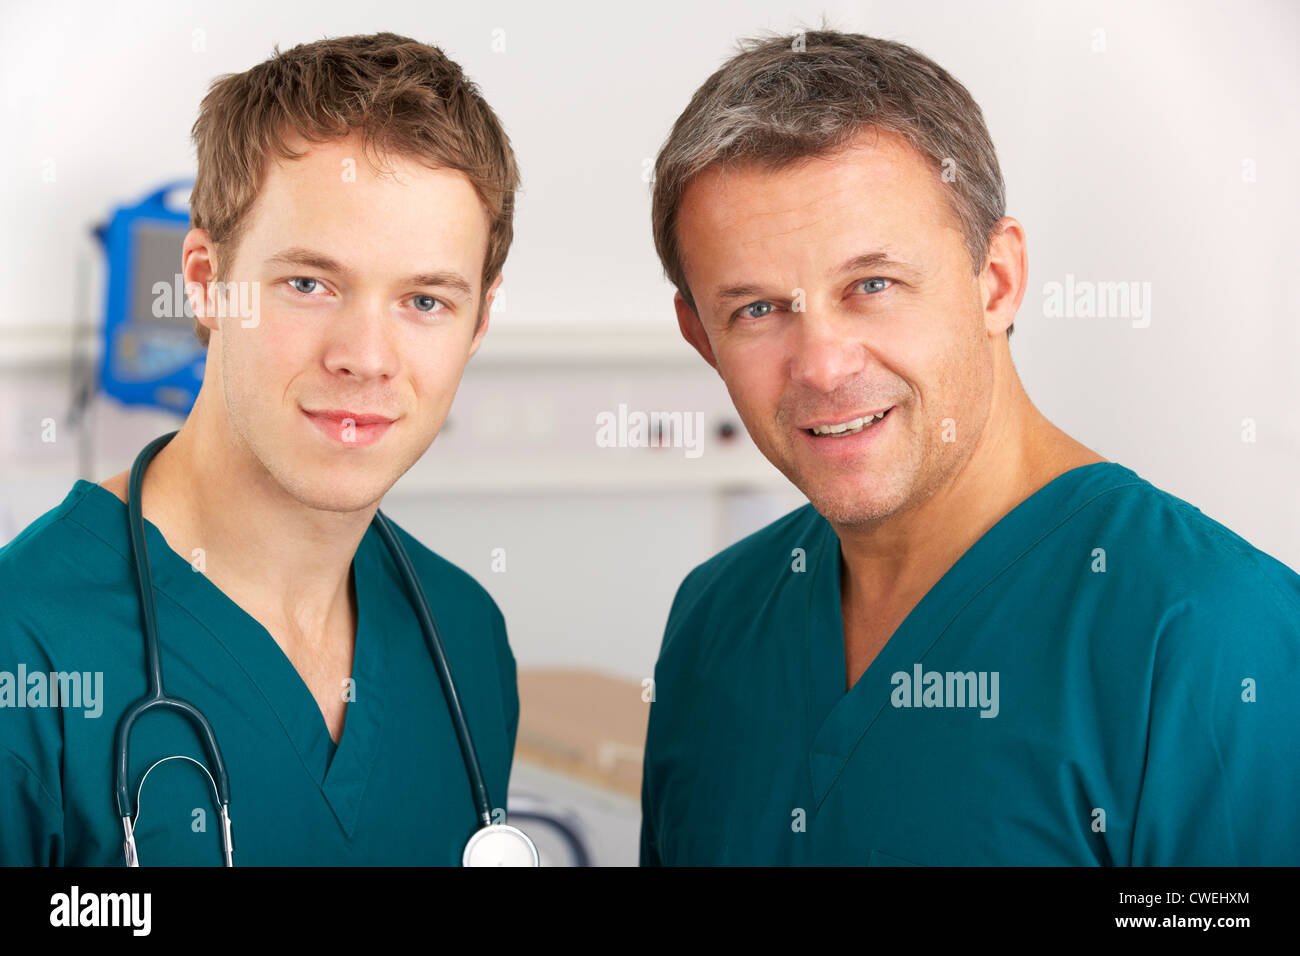 Portrait medical staff on hospital ward Stock Photo